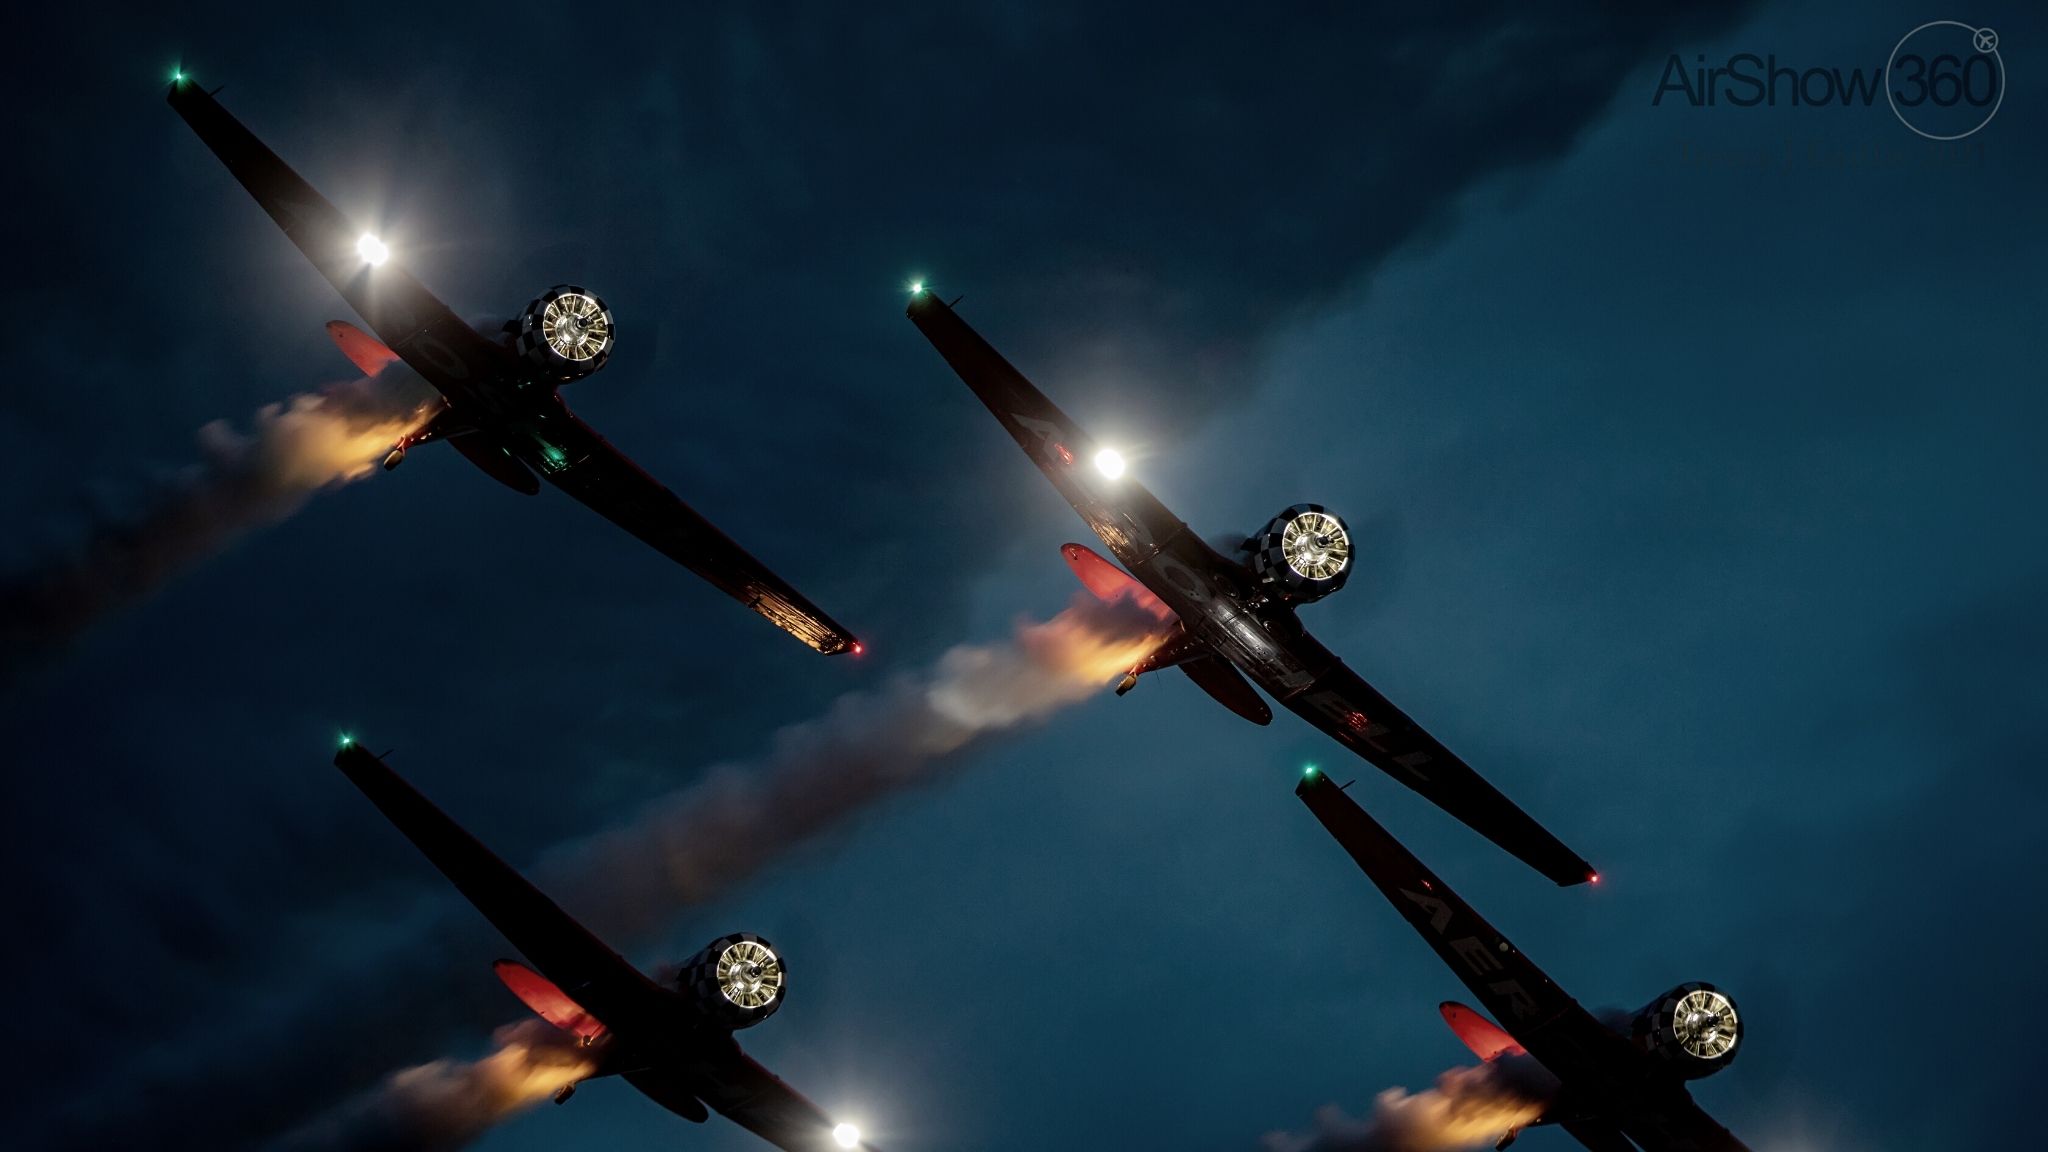 An image of AeroShell Aerobatic Team Performing Night Show